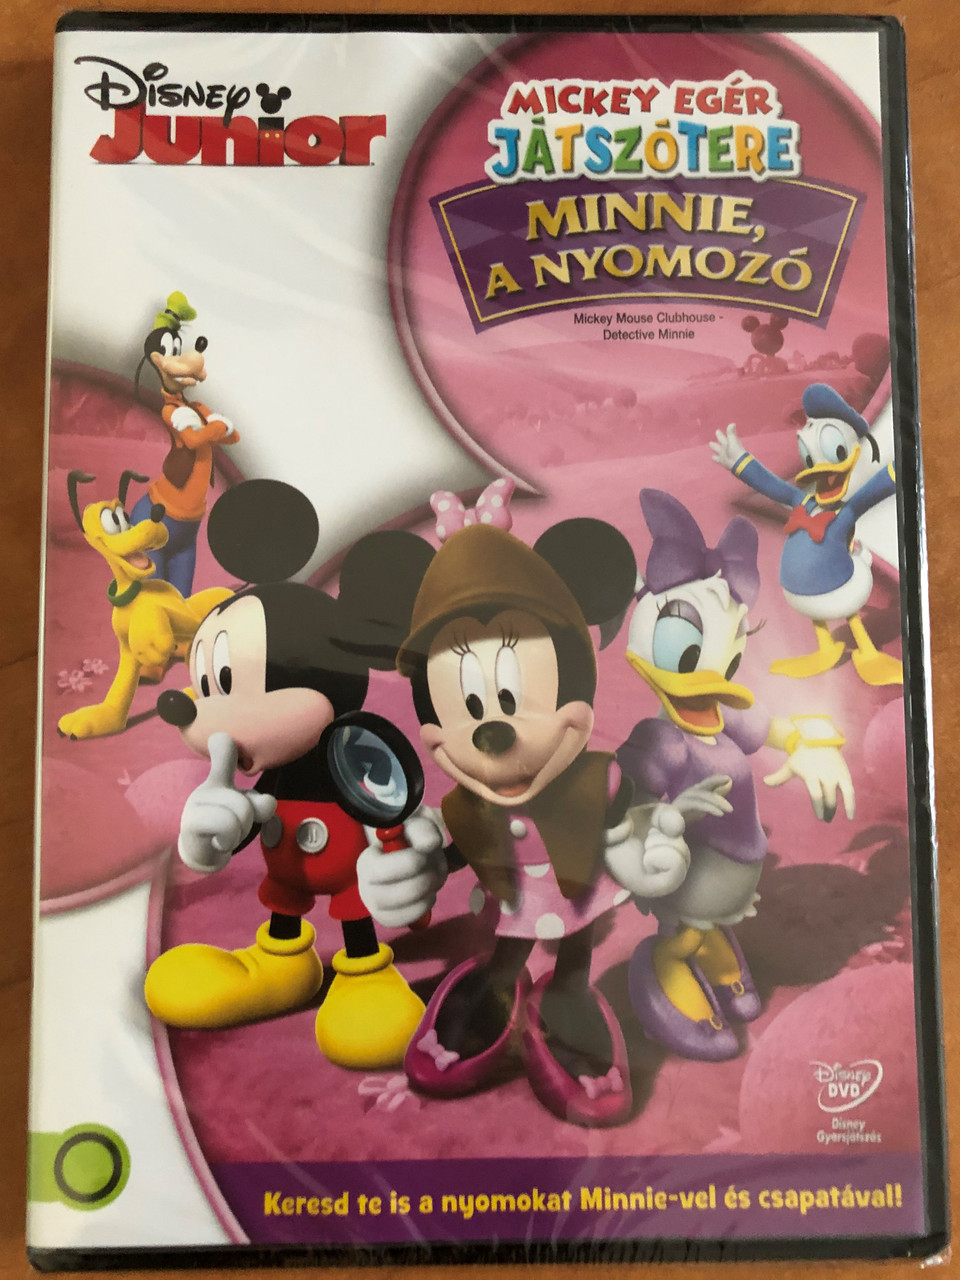 Mickey Mouse clubhouse - Detective Minnie DVD 2006 Mickey Egér Játszótere -  Minnie a nyomozó / Directed by Donovan Cook / Story by Bobs Gannaway -  bibleinmylanguage